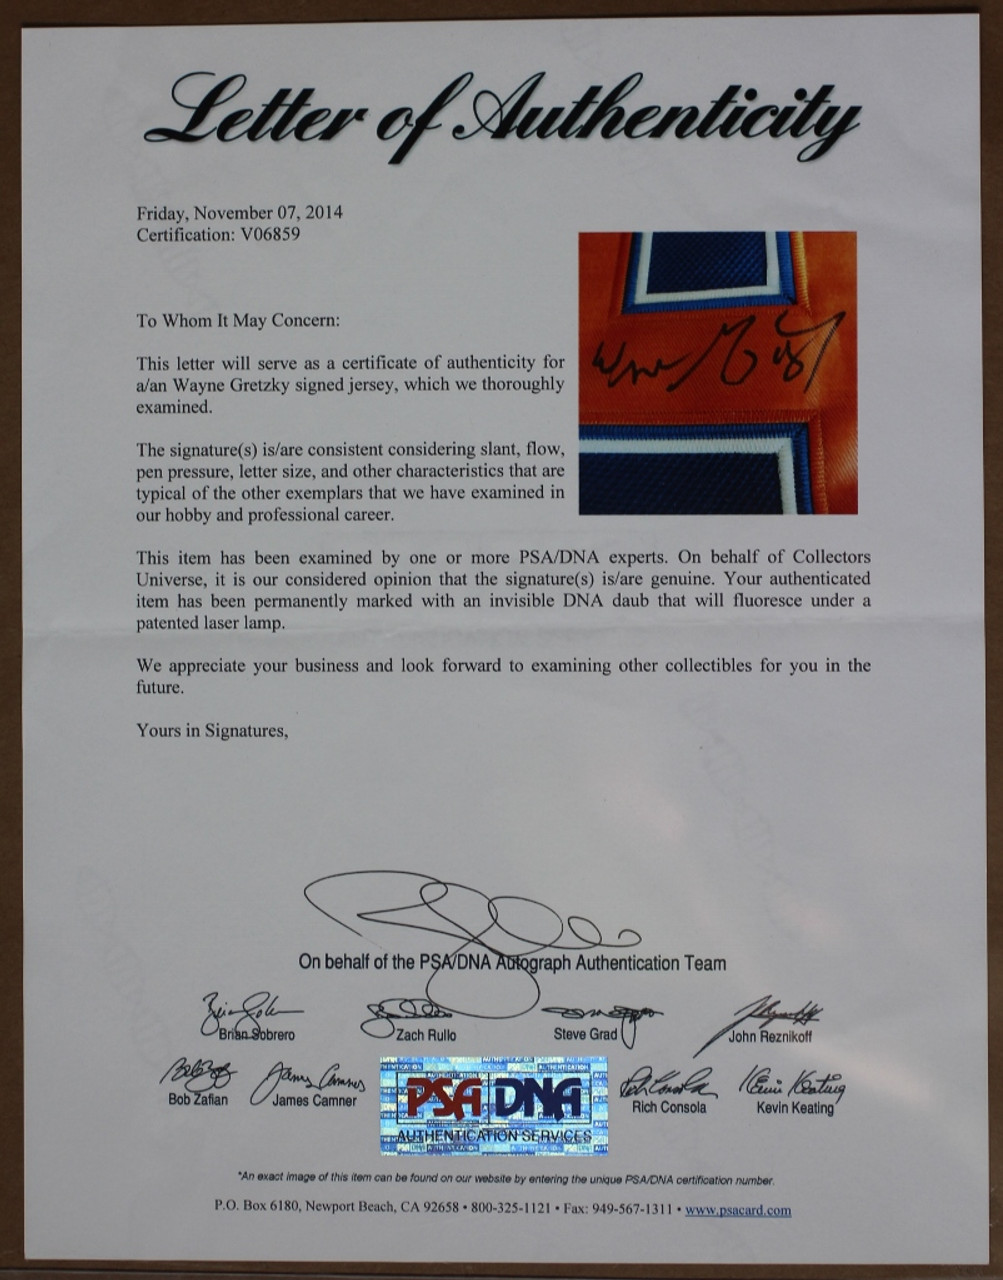 Wayne Gretzky Edmonton Oilers Deluxe Framed Autographed Jersey